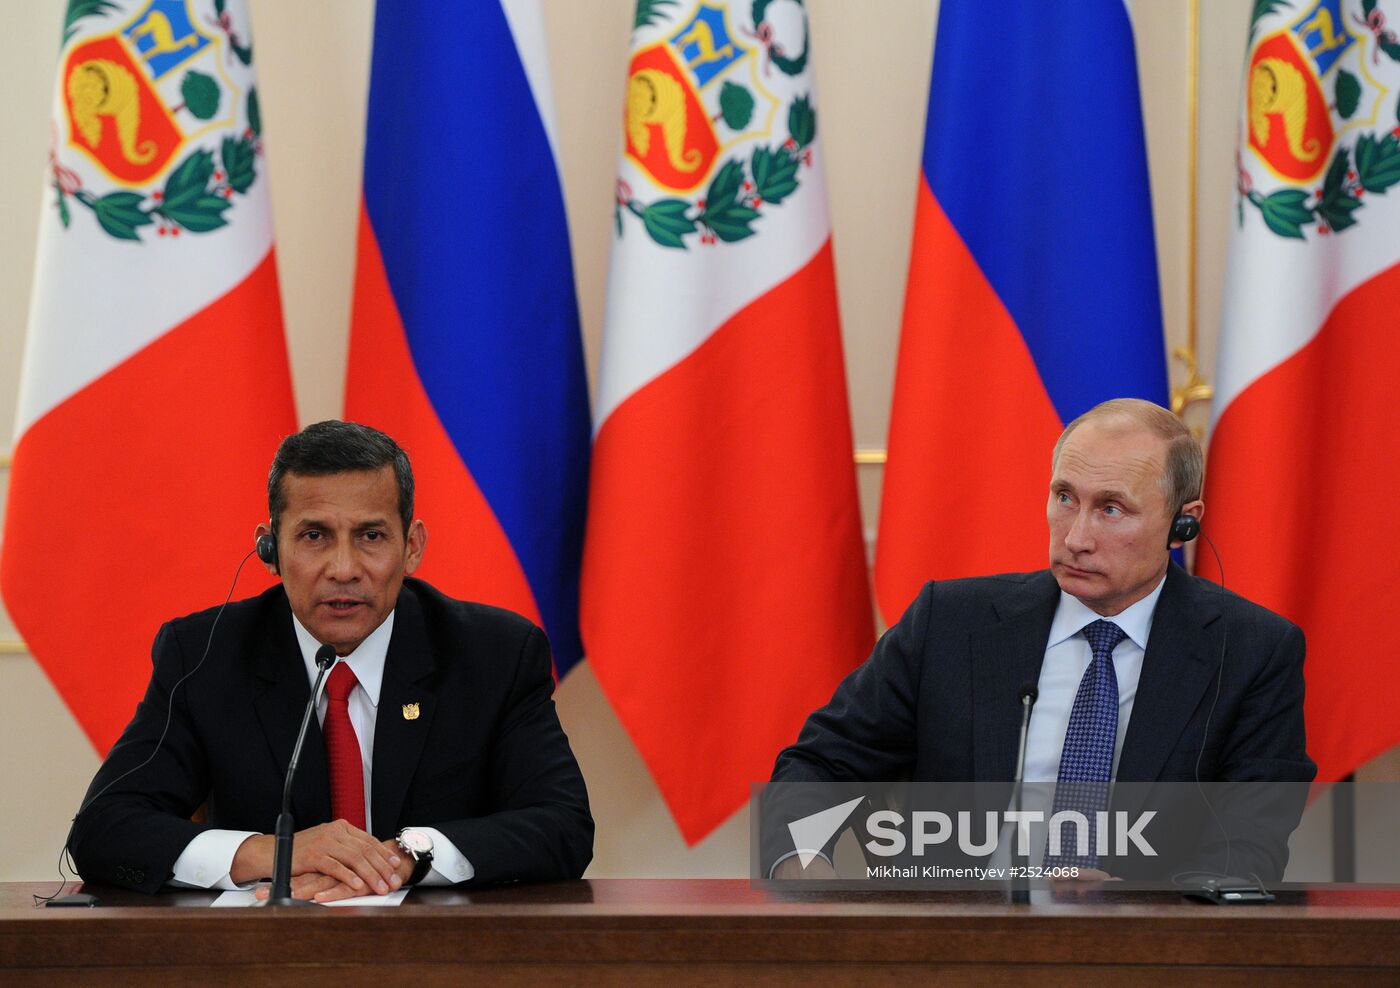 Vladimir Putin meets with Ollanta Humala